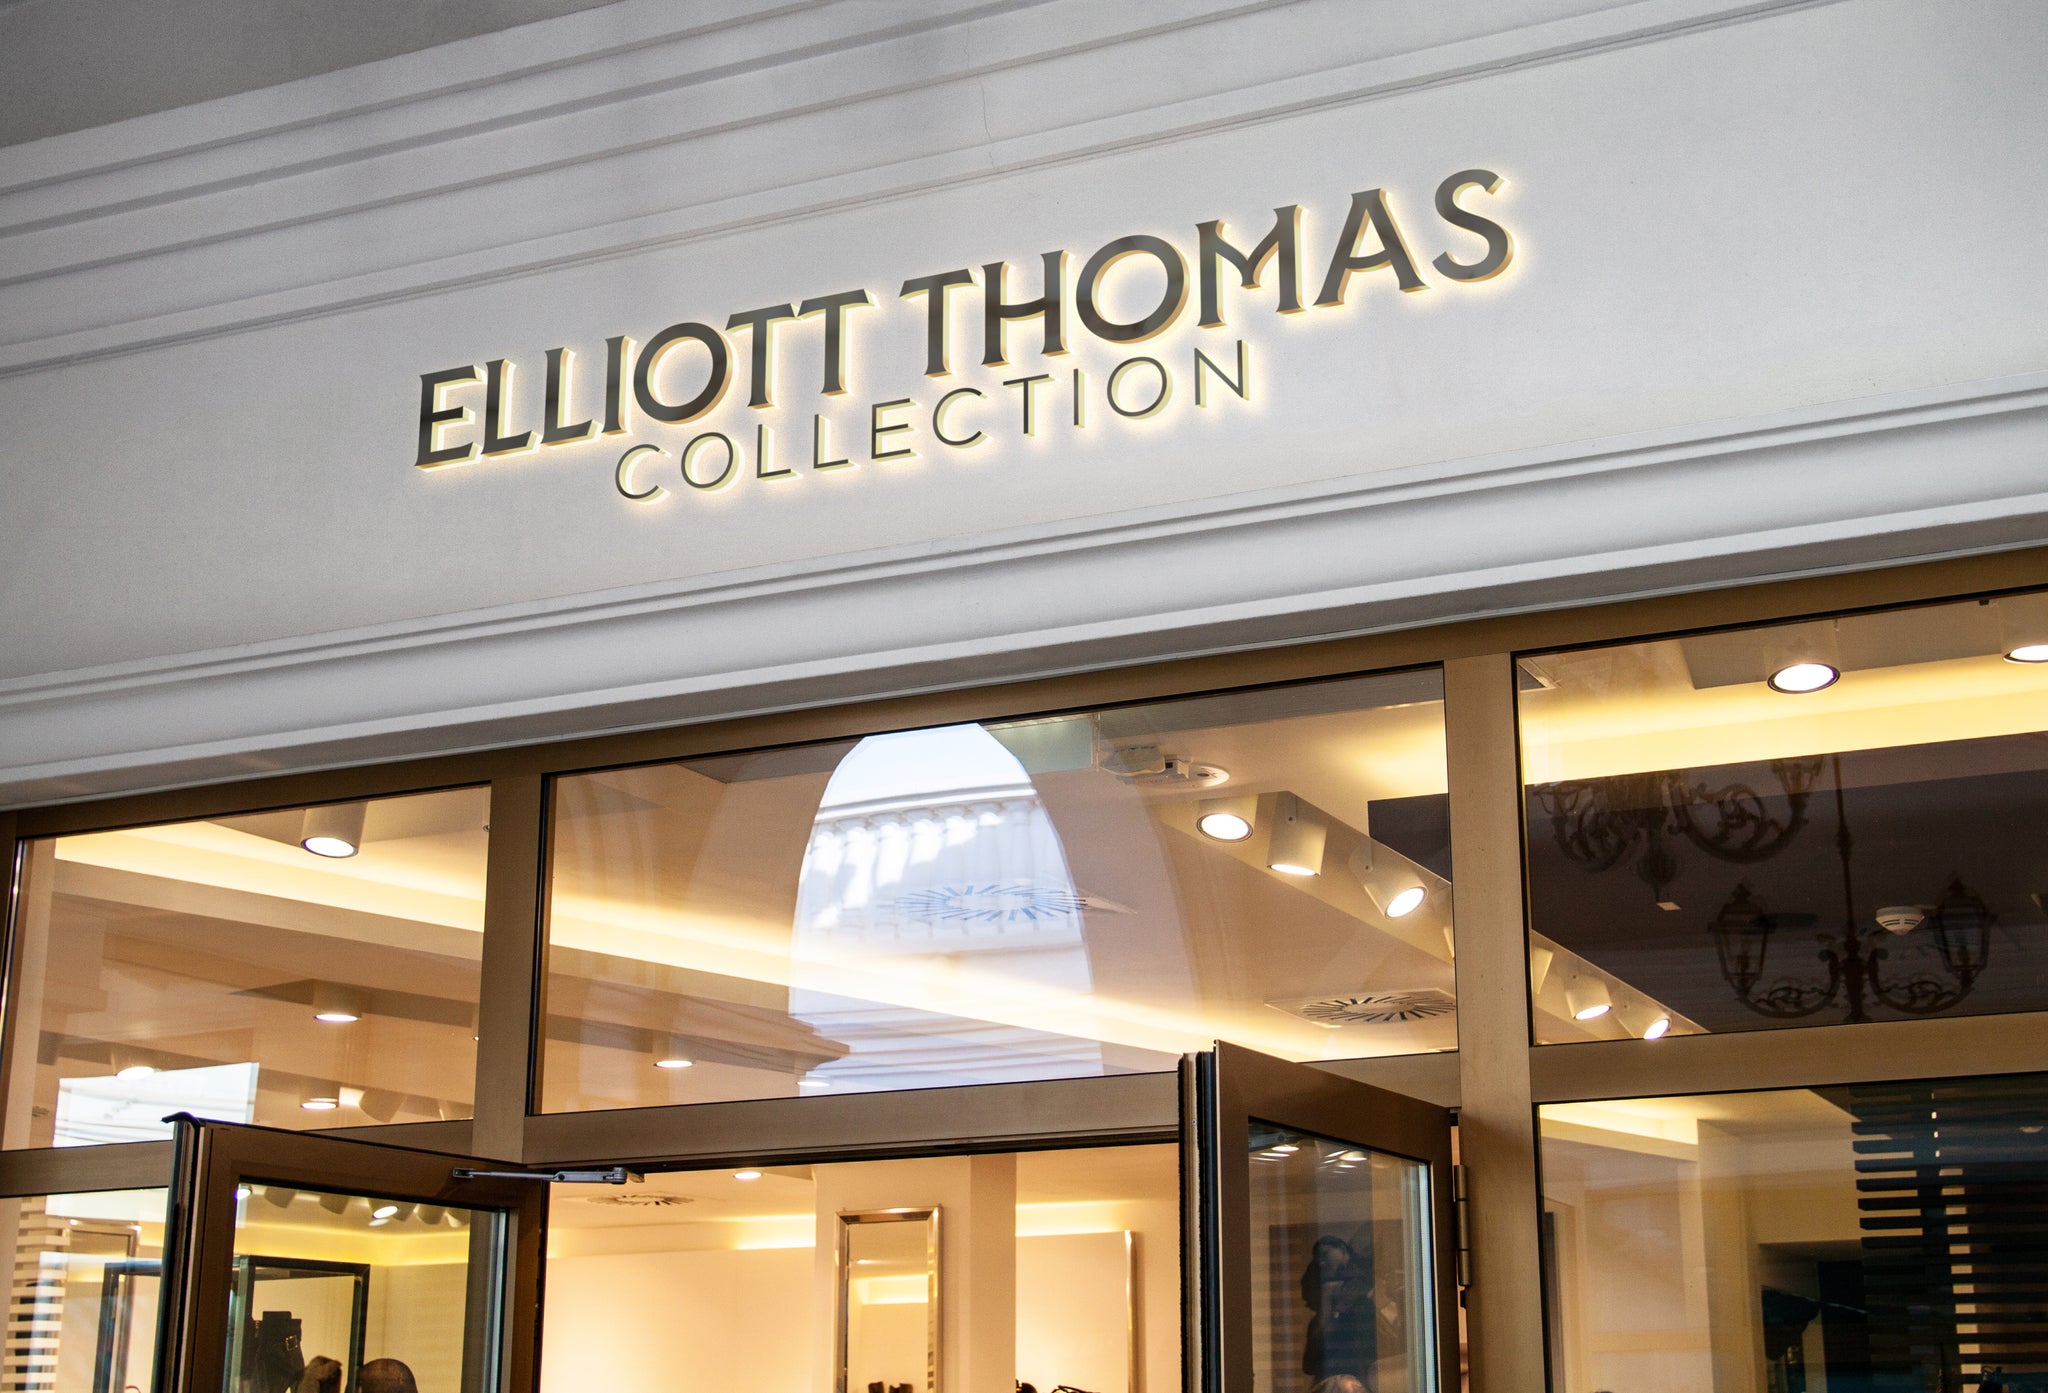 Thomas Collection